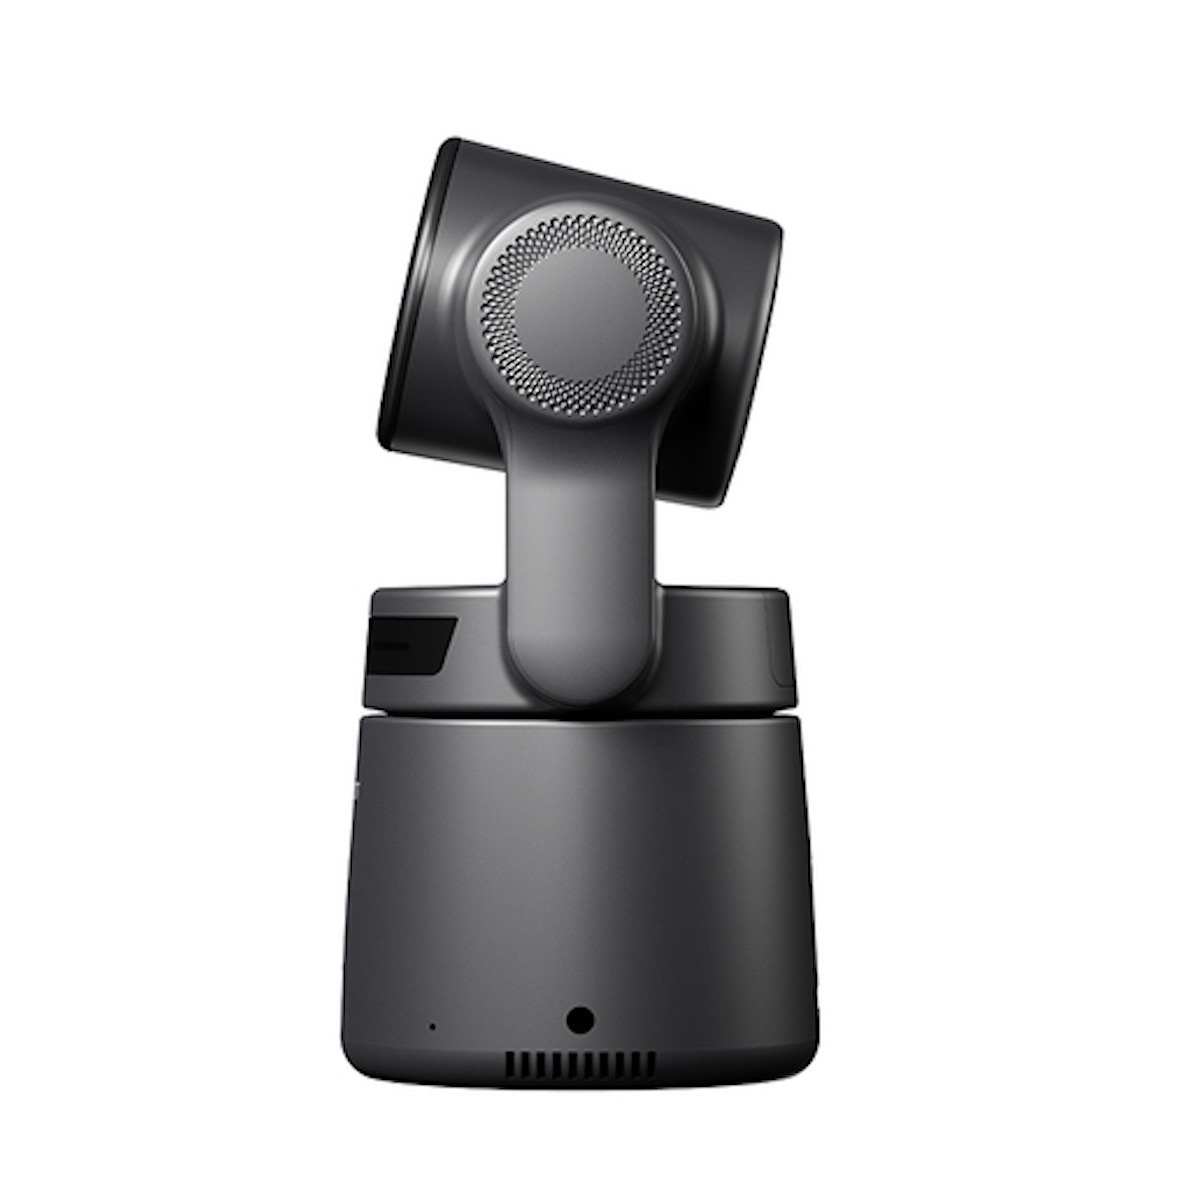 Obsbot Tail Air KI-gesteuerte PTZ- Streaming Kamera